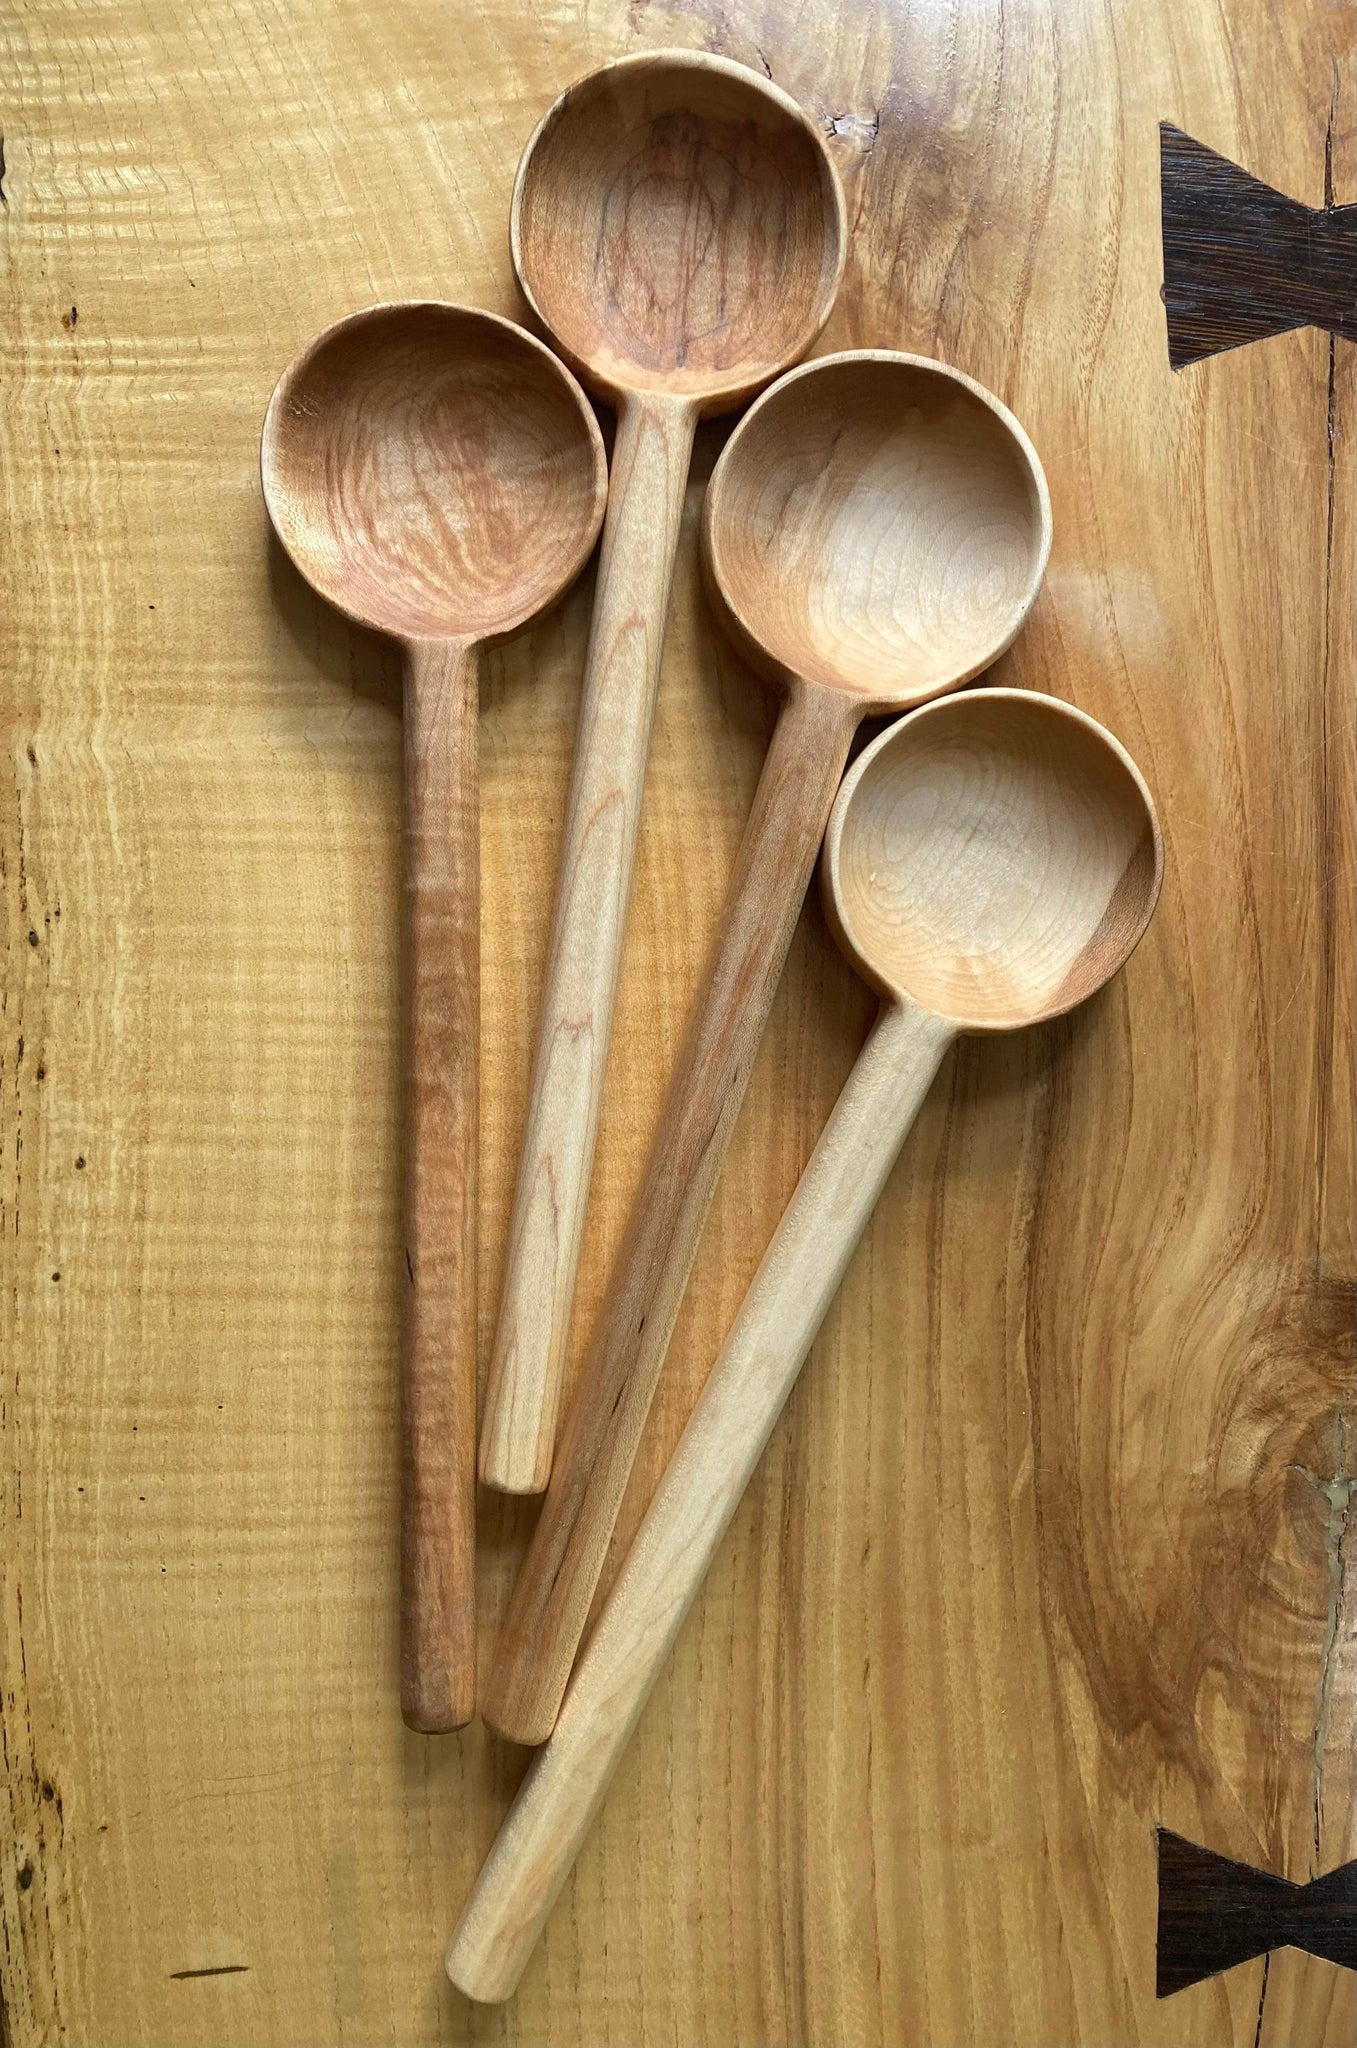 NOG - Local Handmade Large Wooden Spoon